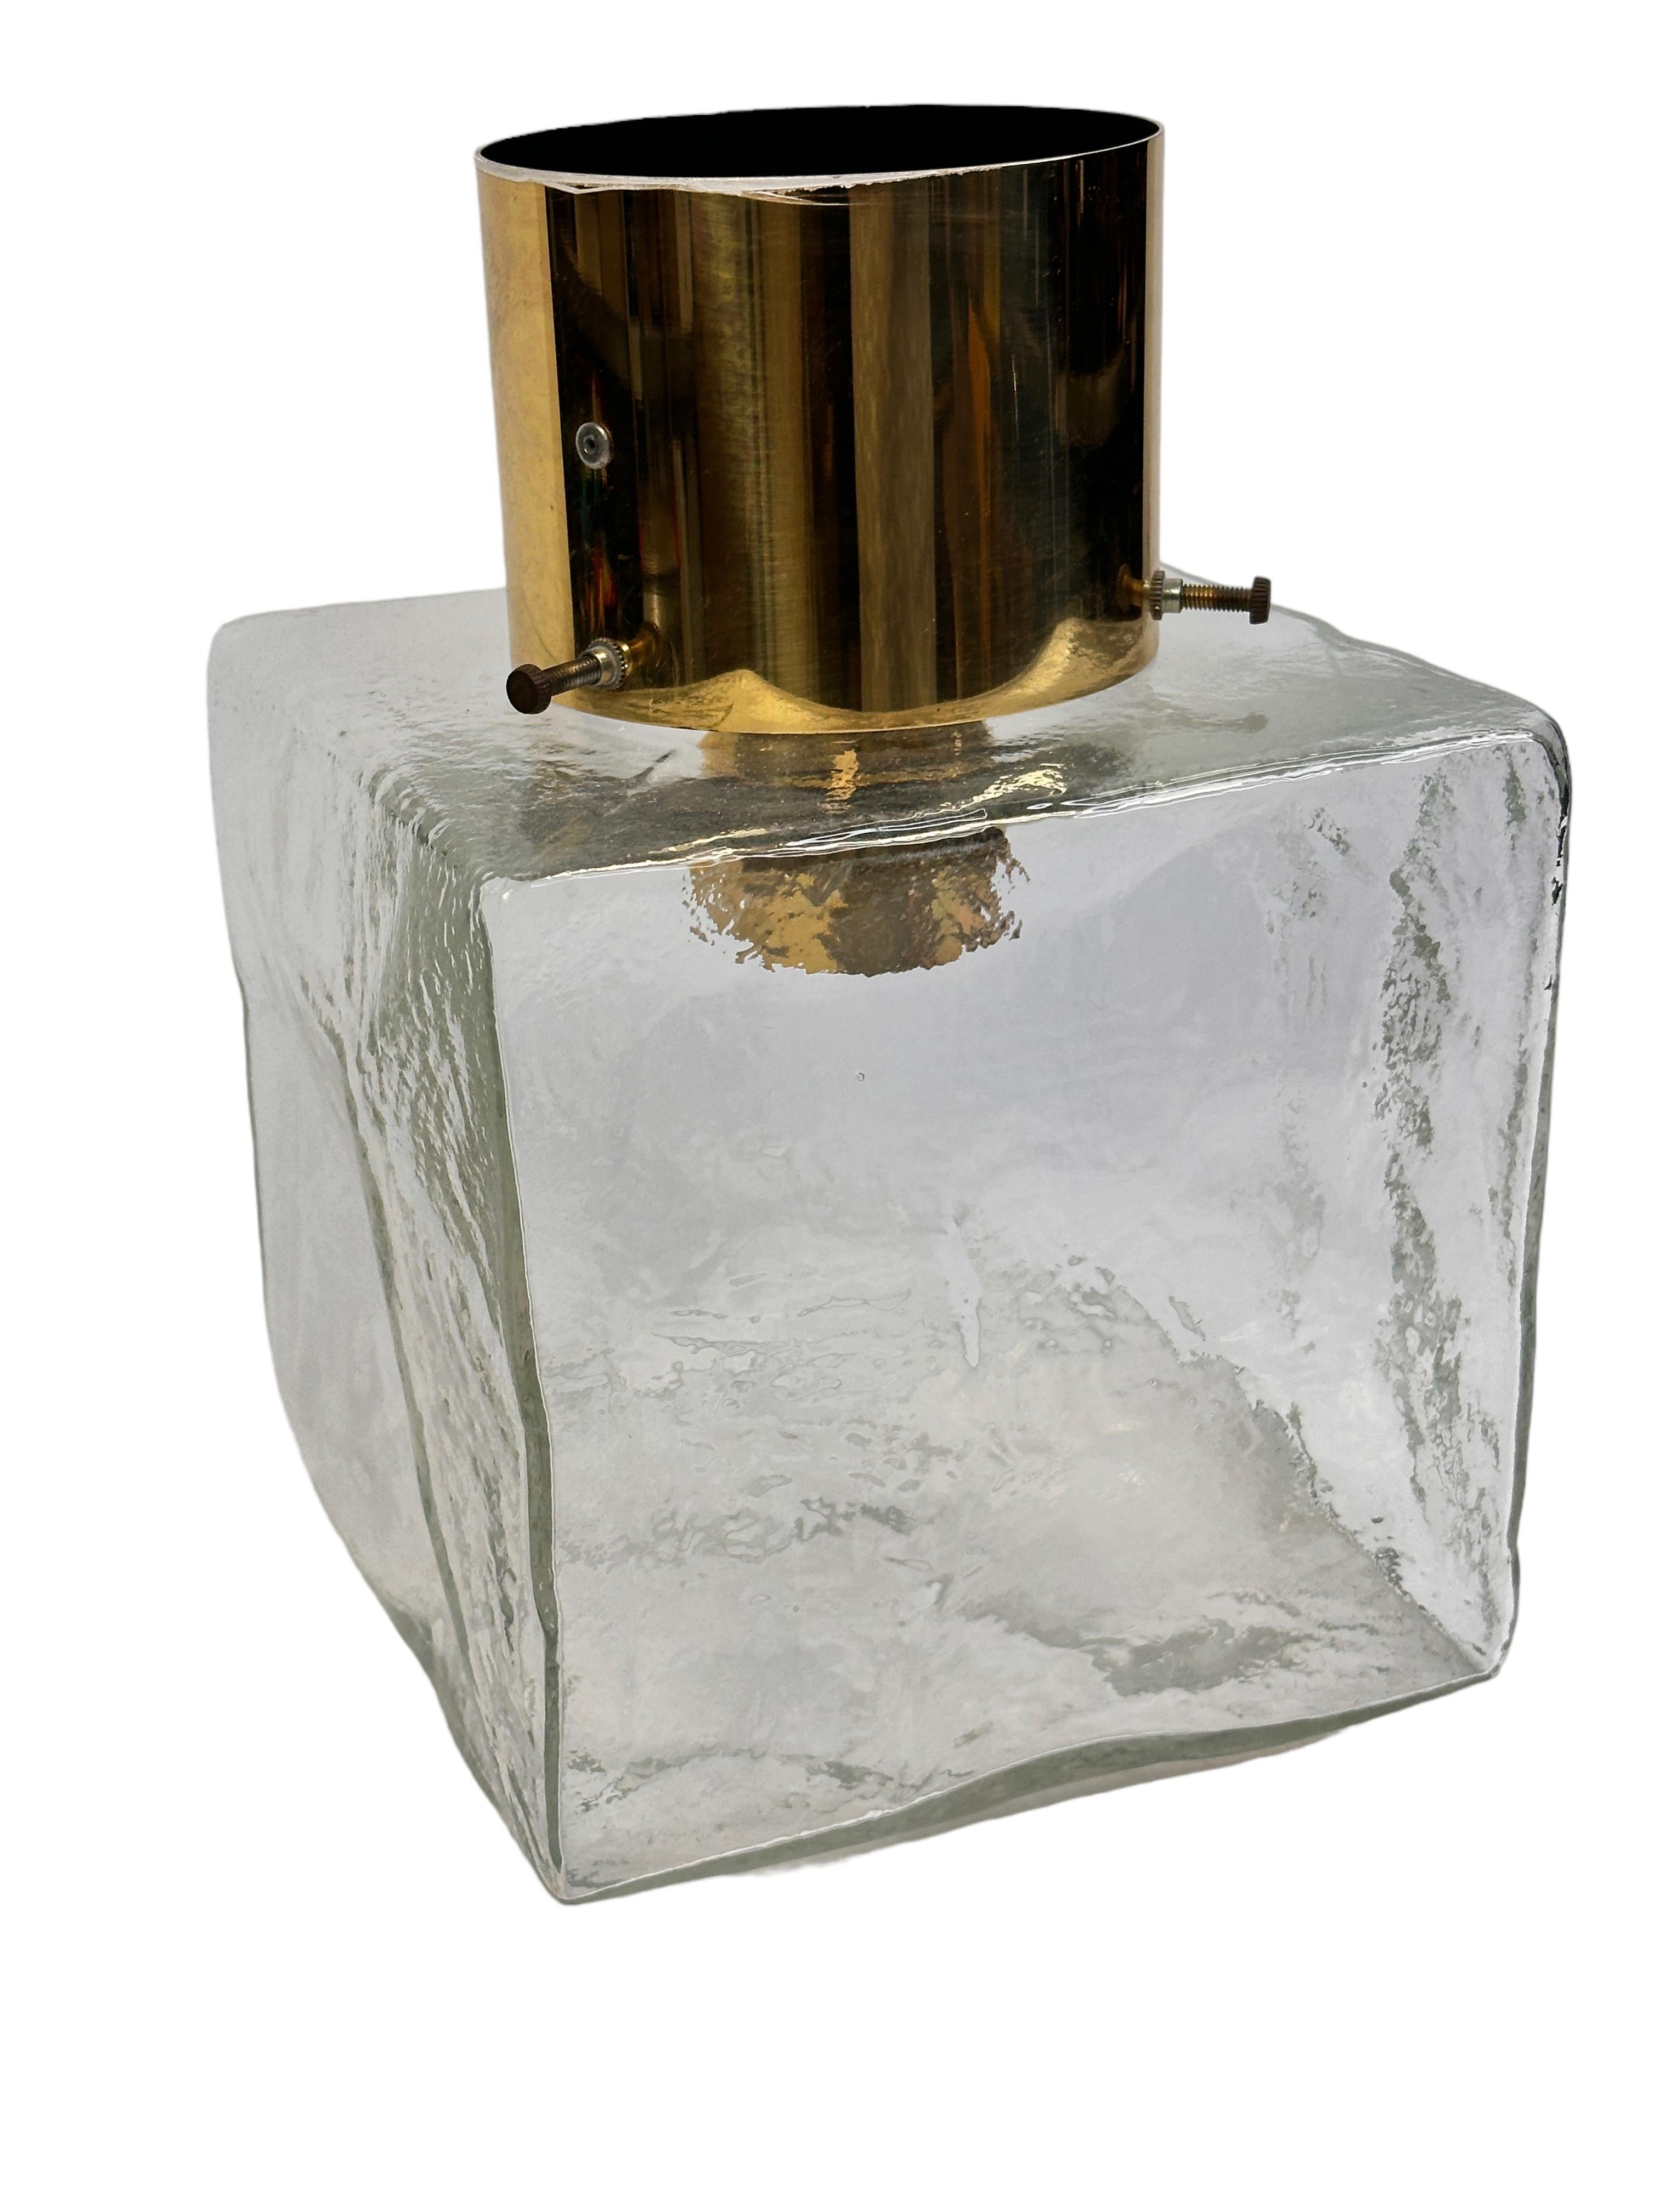 Pair of Large Ice Glass Cube Brass Flush Mount Light Fixture by Kalmar, Austria For Sale 2